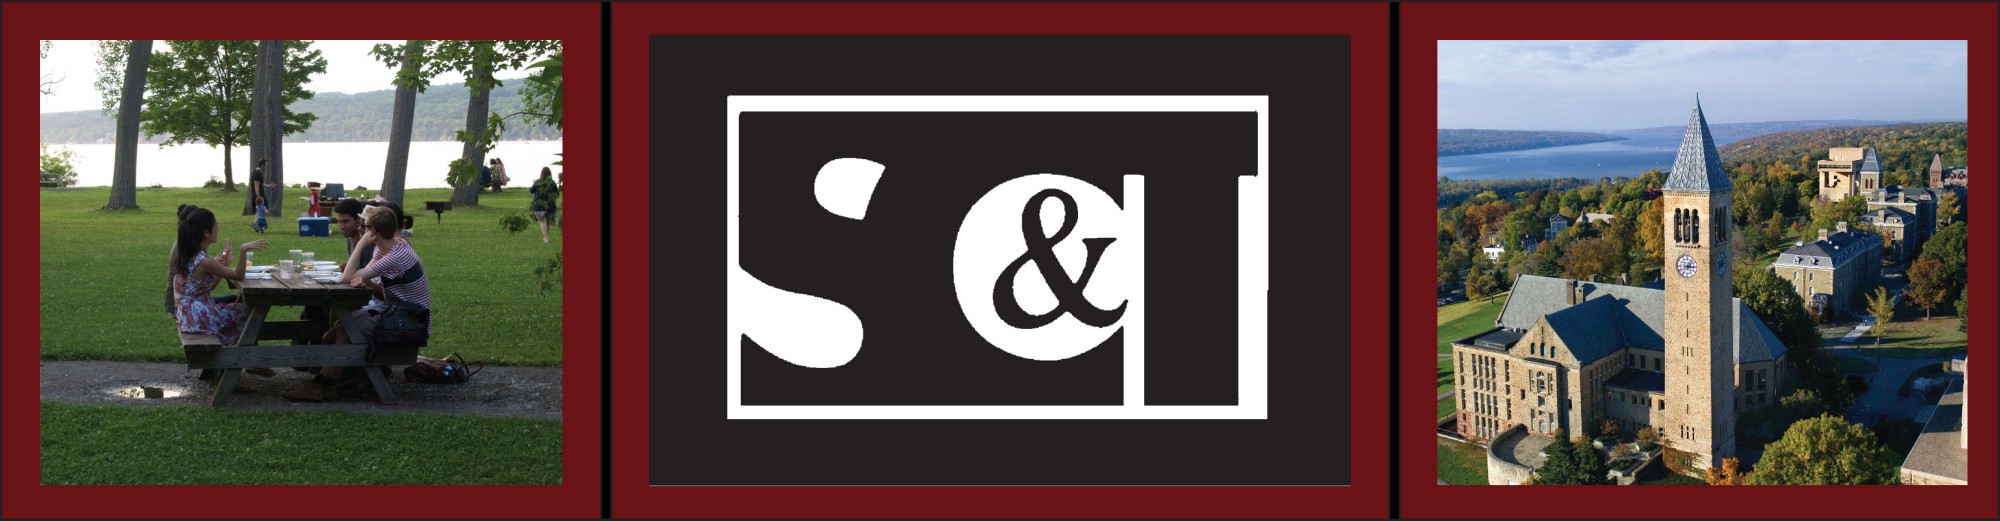 SCT logo